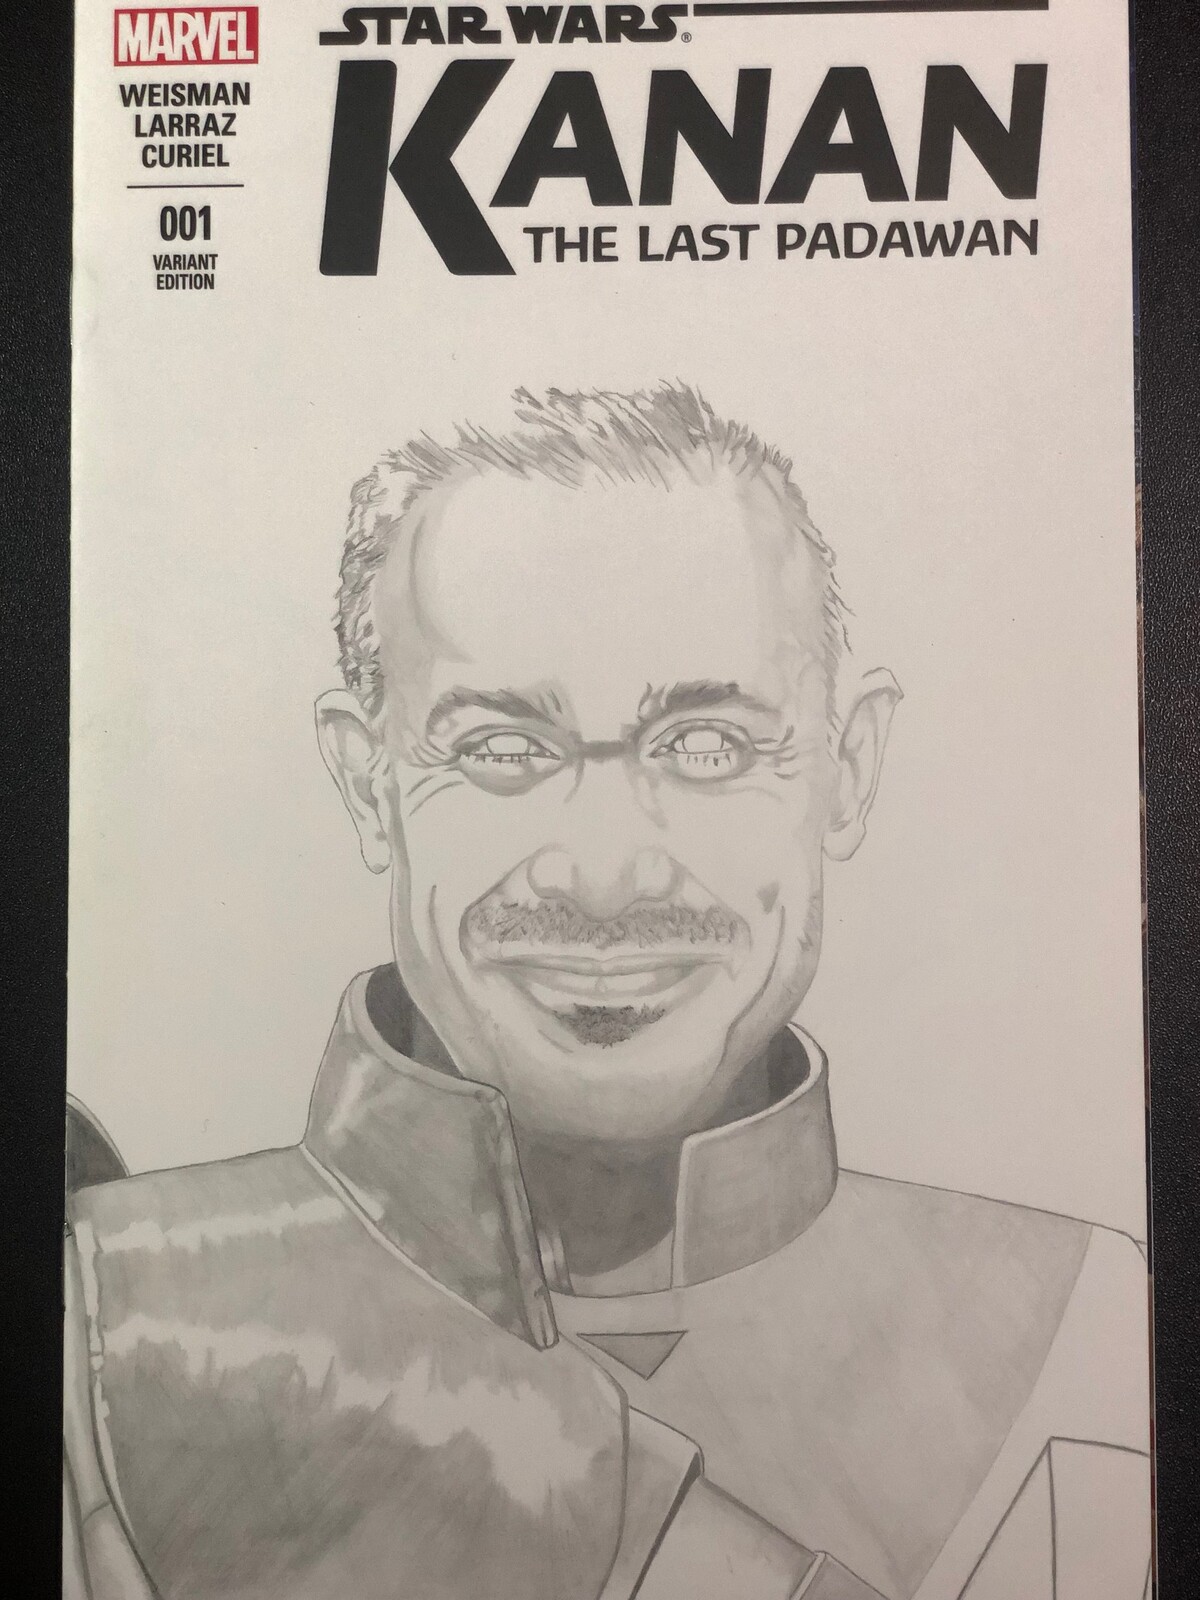 Comic cover art Freddie Prince Jr as Kanan 